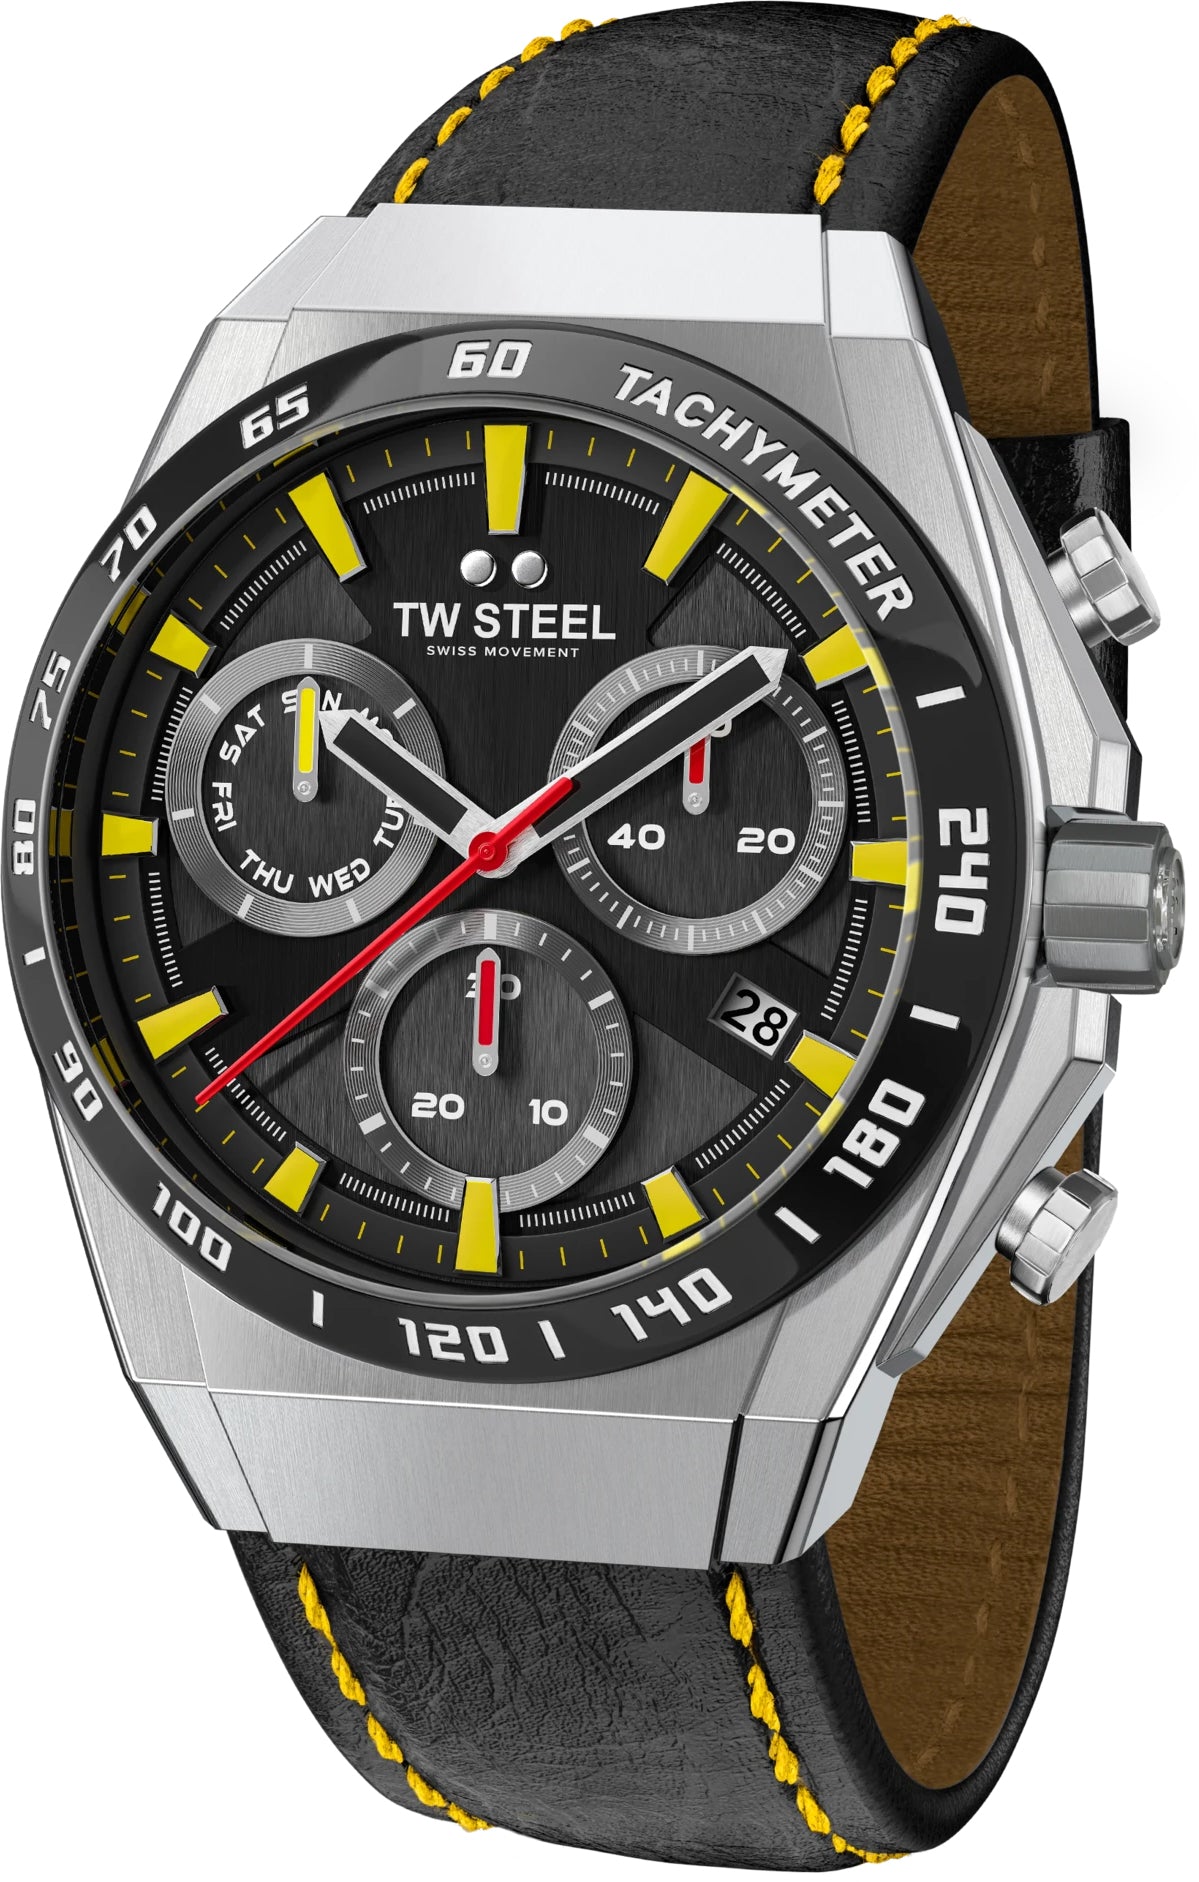 Photos - Wrist Watch TW Steel Watch Fast Lane CEO Tech Special Edition TW-639 